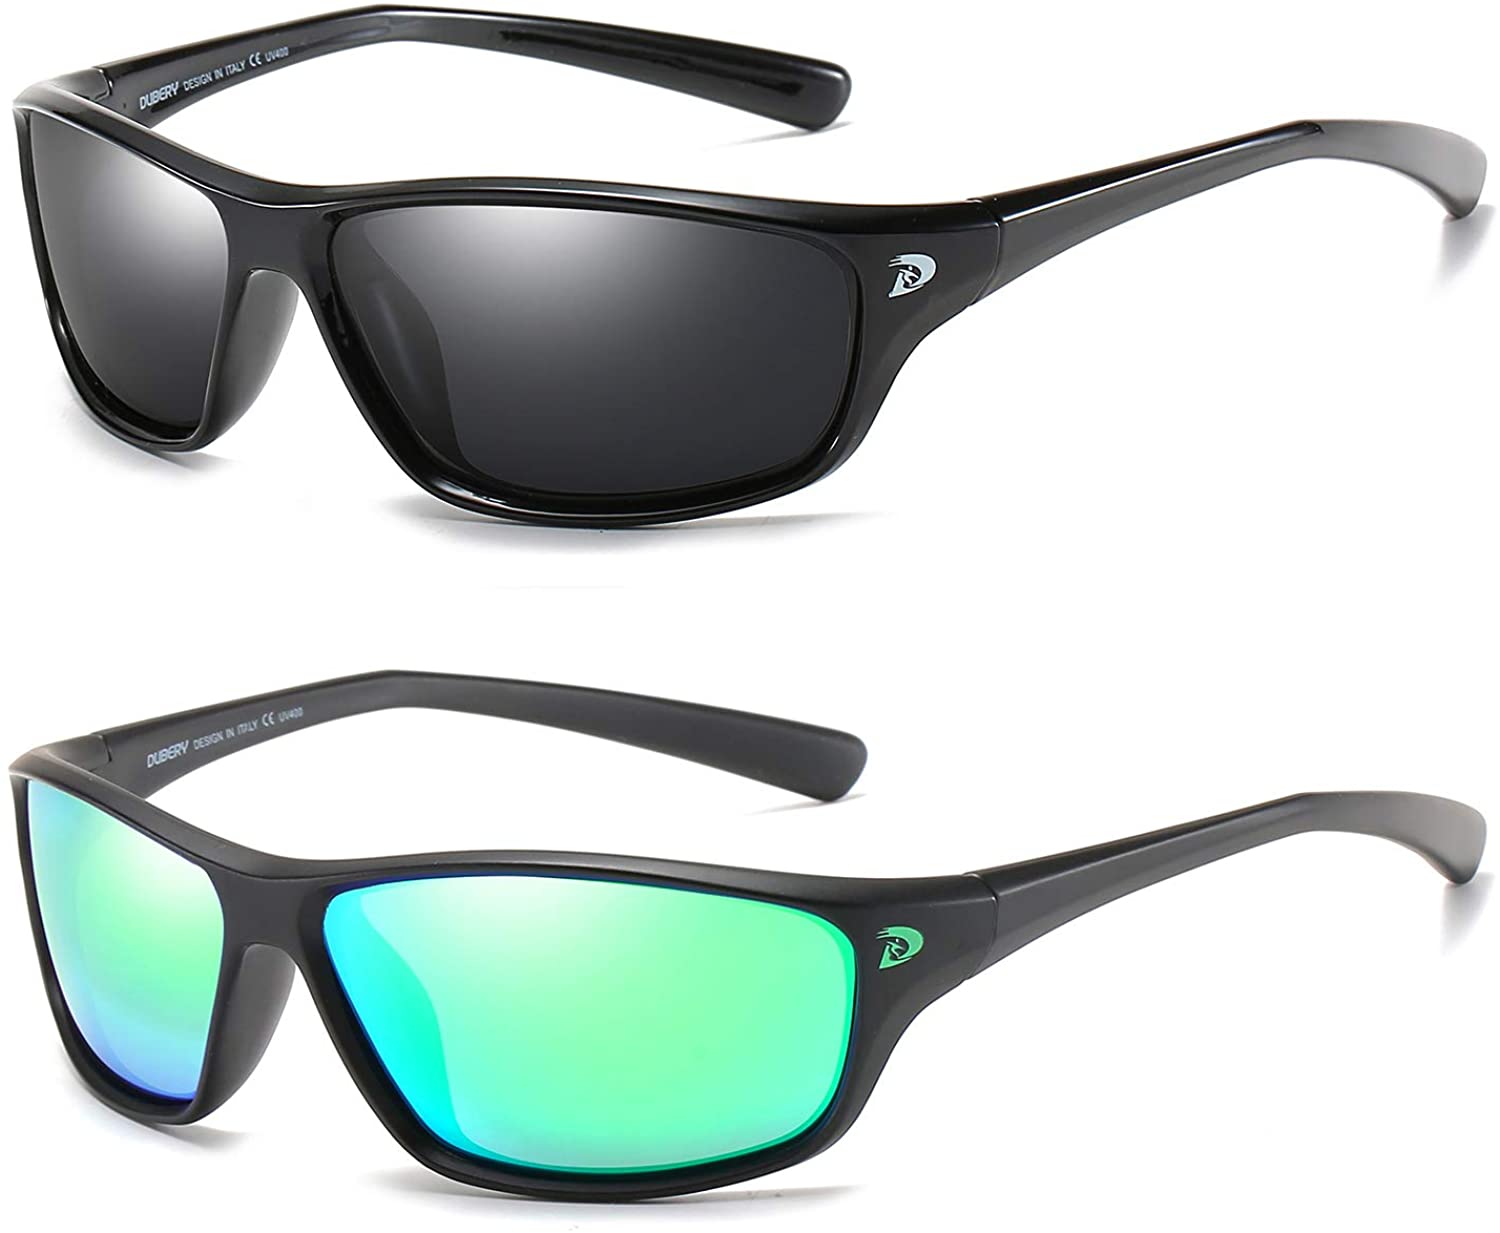 Dubery Polarized Sport Sunglasses For Men And Women 